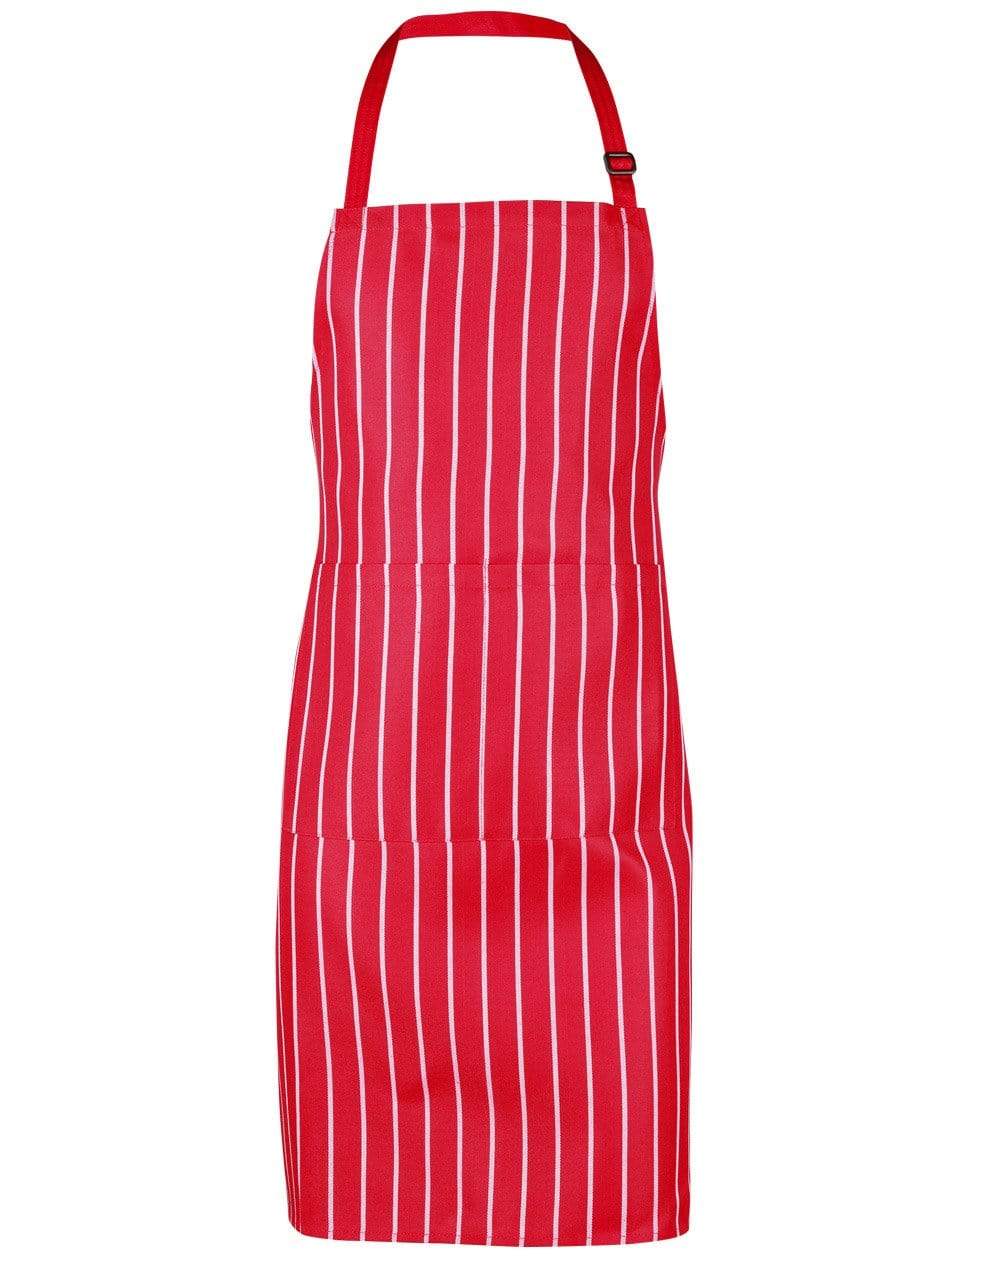 Australian Industrial Wear Hospitality & Chefwear Red/White / W 70cm x H 85cm long WAIST APRON AP04